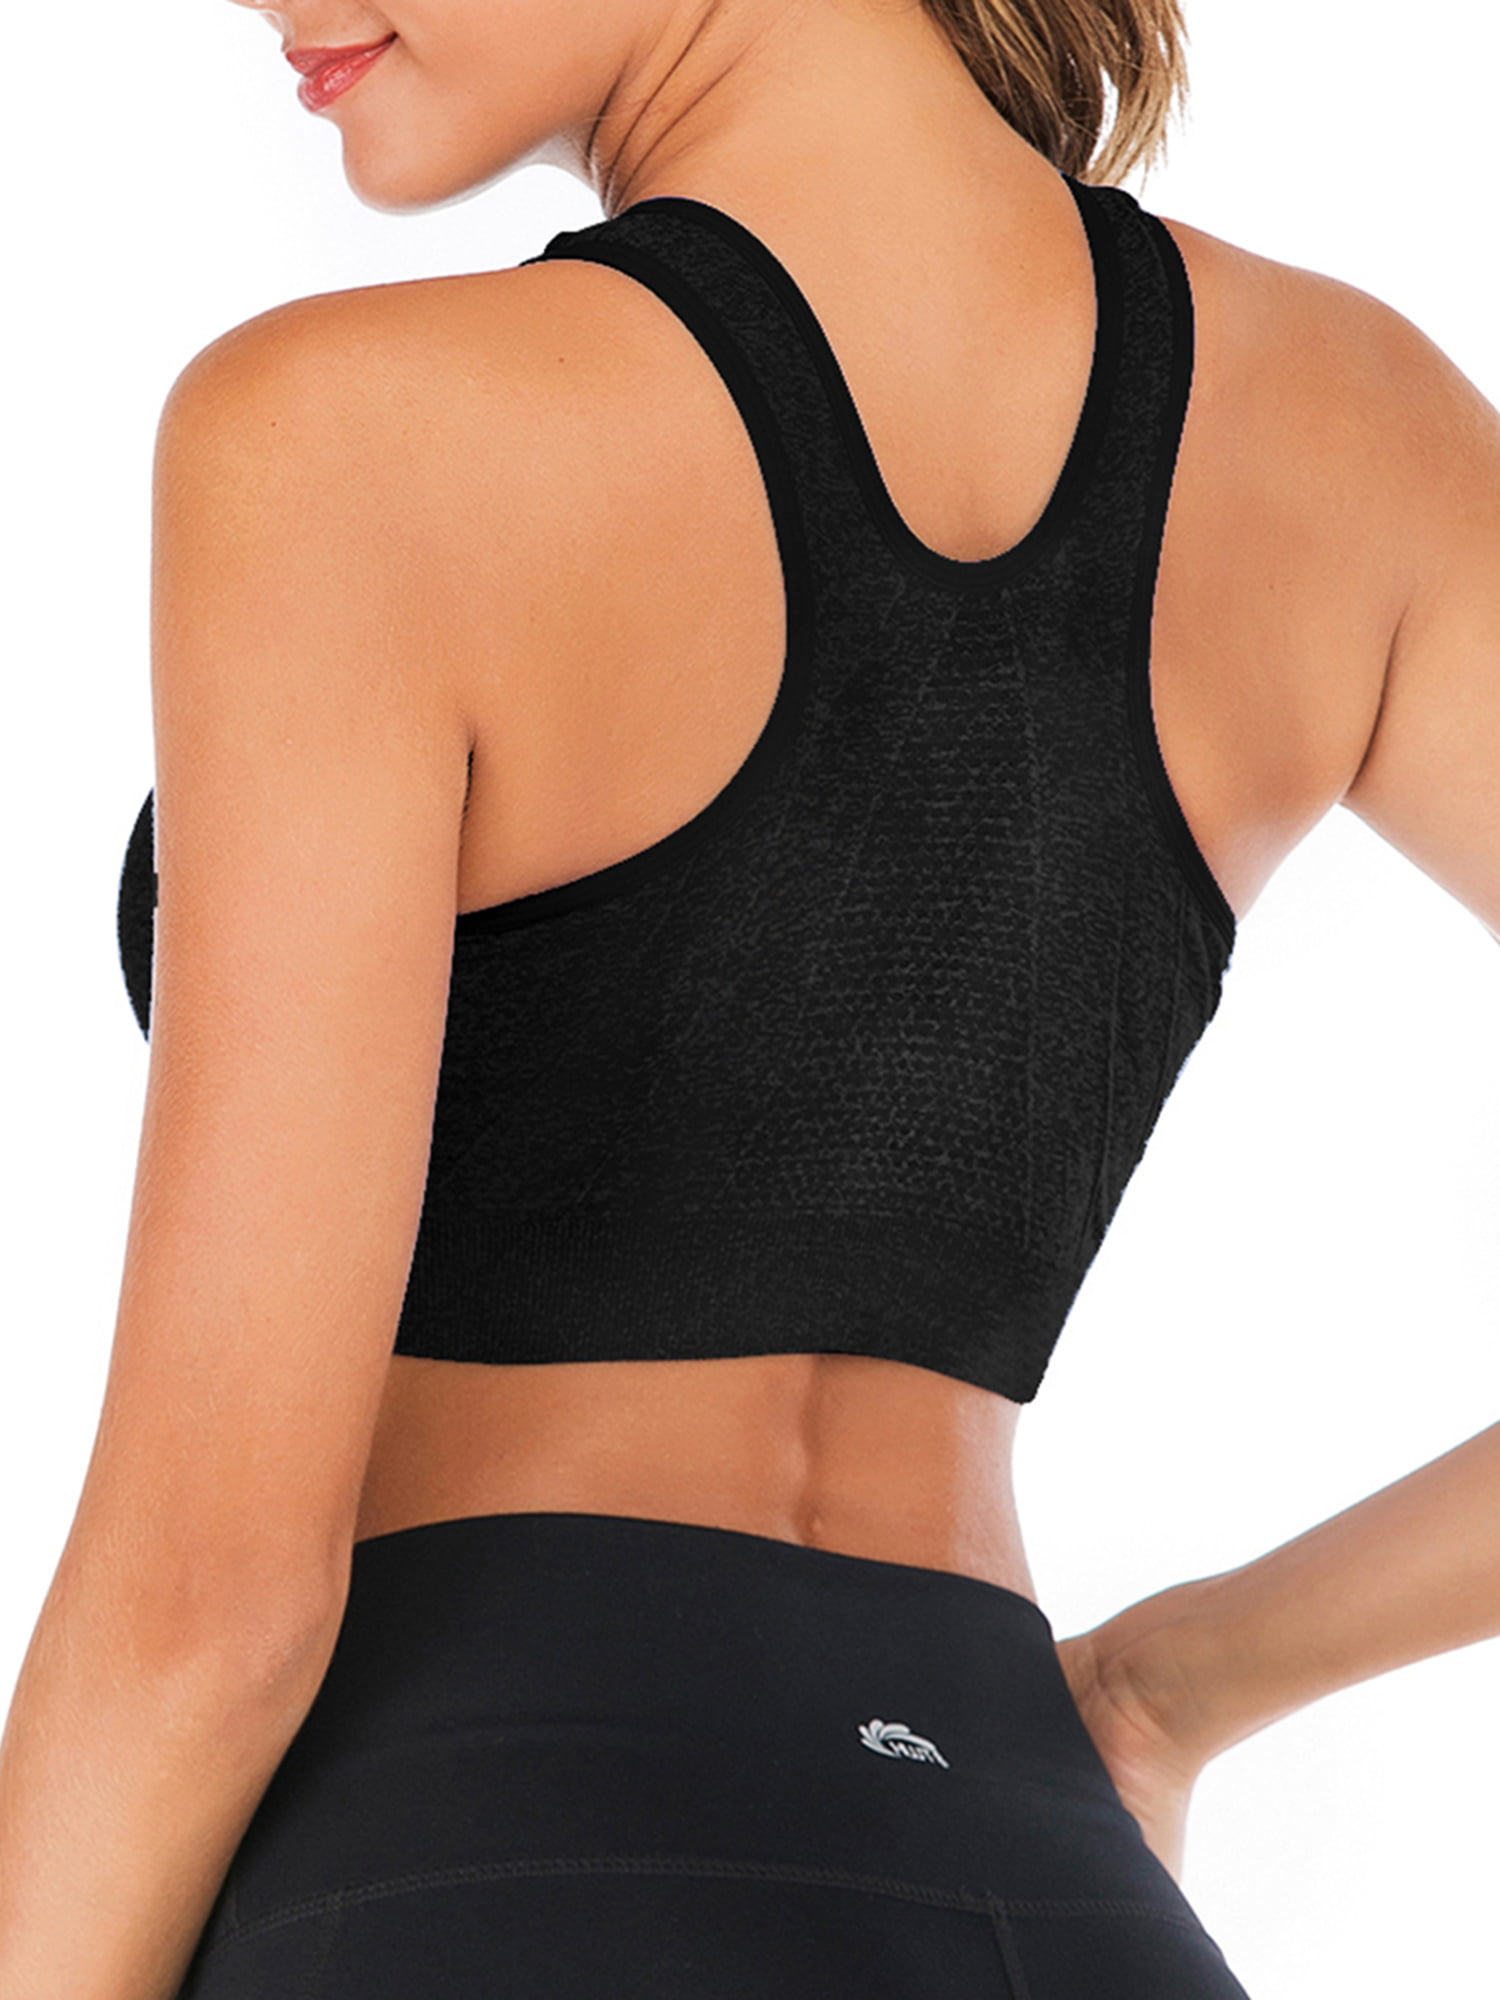 ohlyah Women's Zipper Front Closure Sports Bra Racerback Yoga Bras, 3 Pack:  Black Nude White, 3X-Large